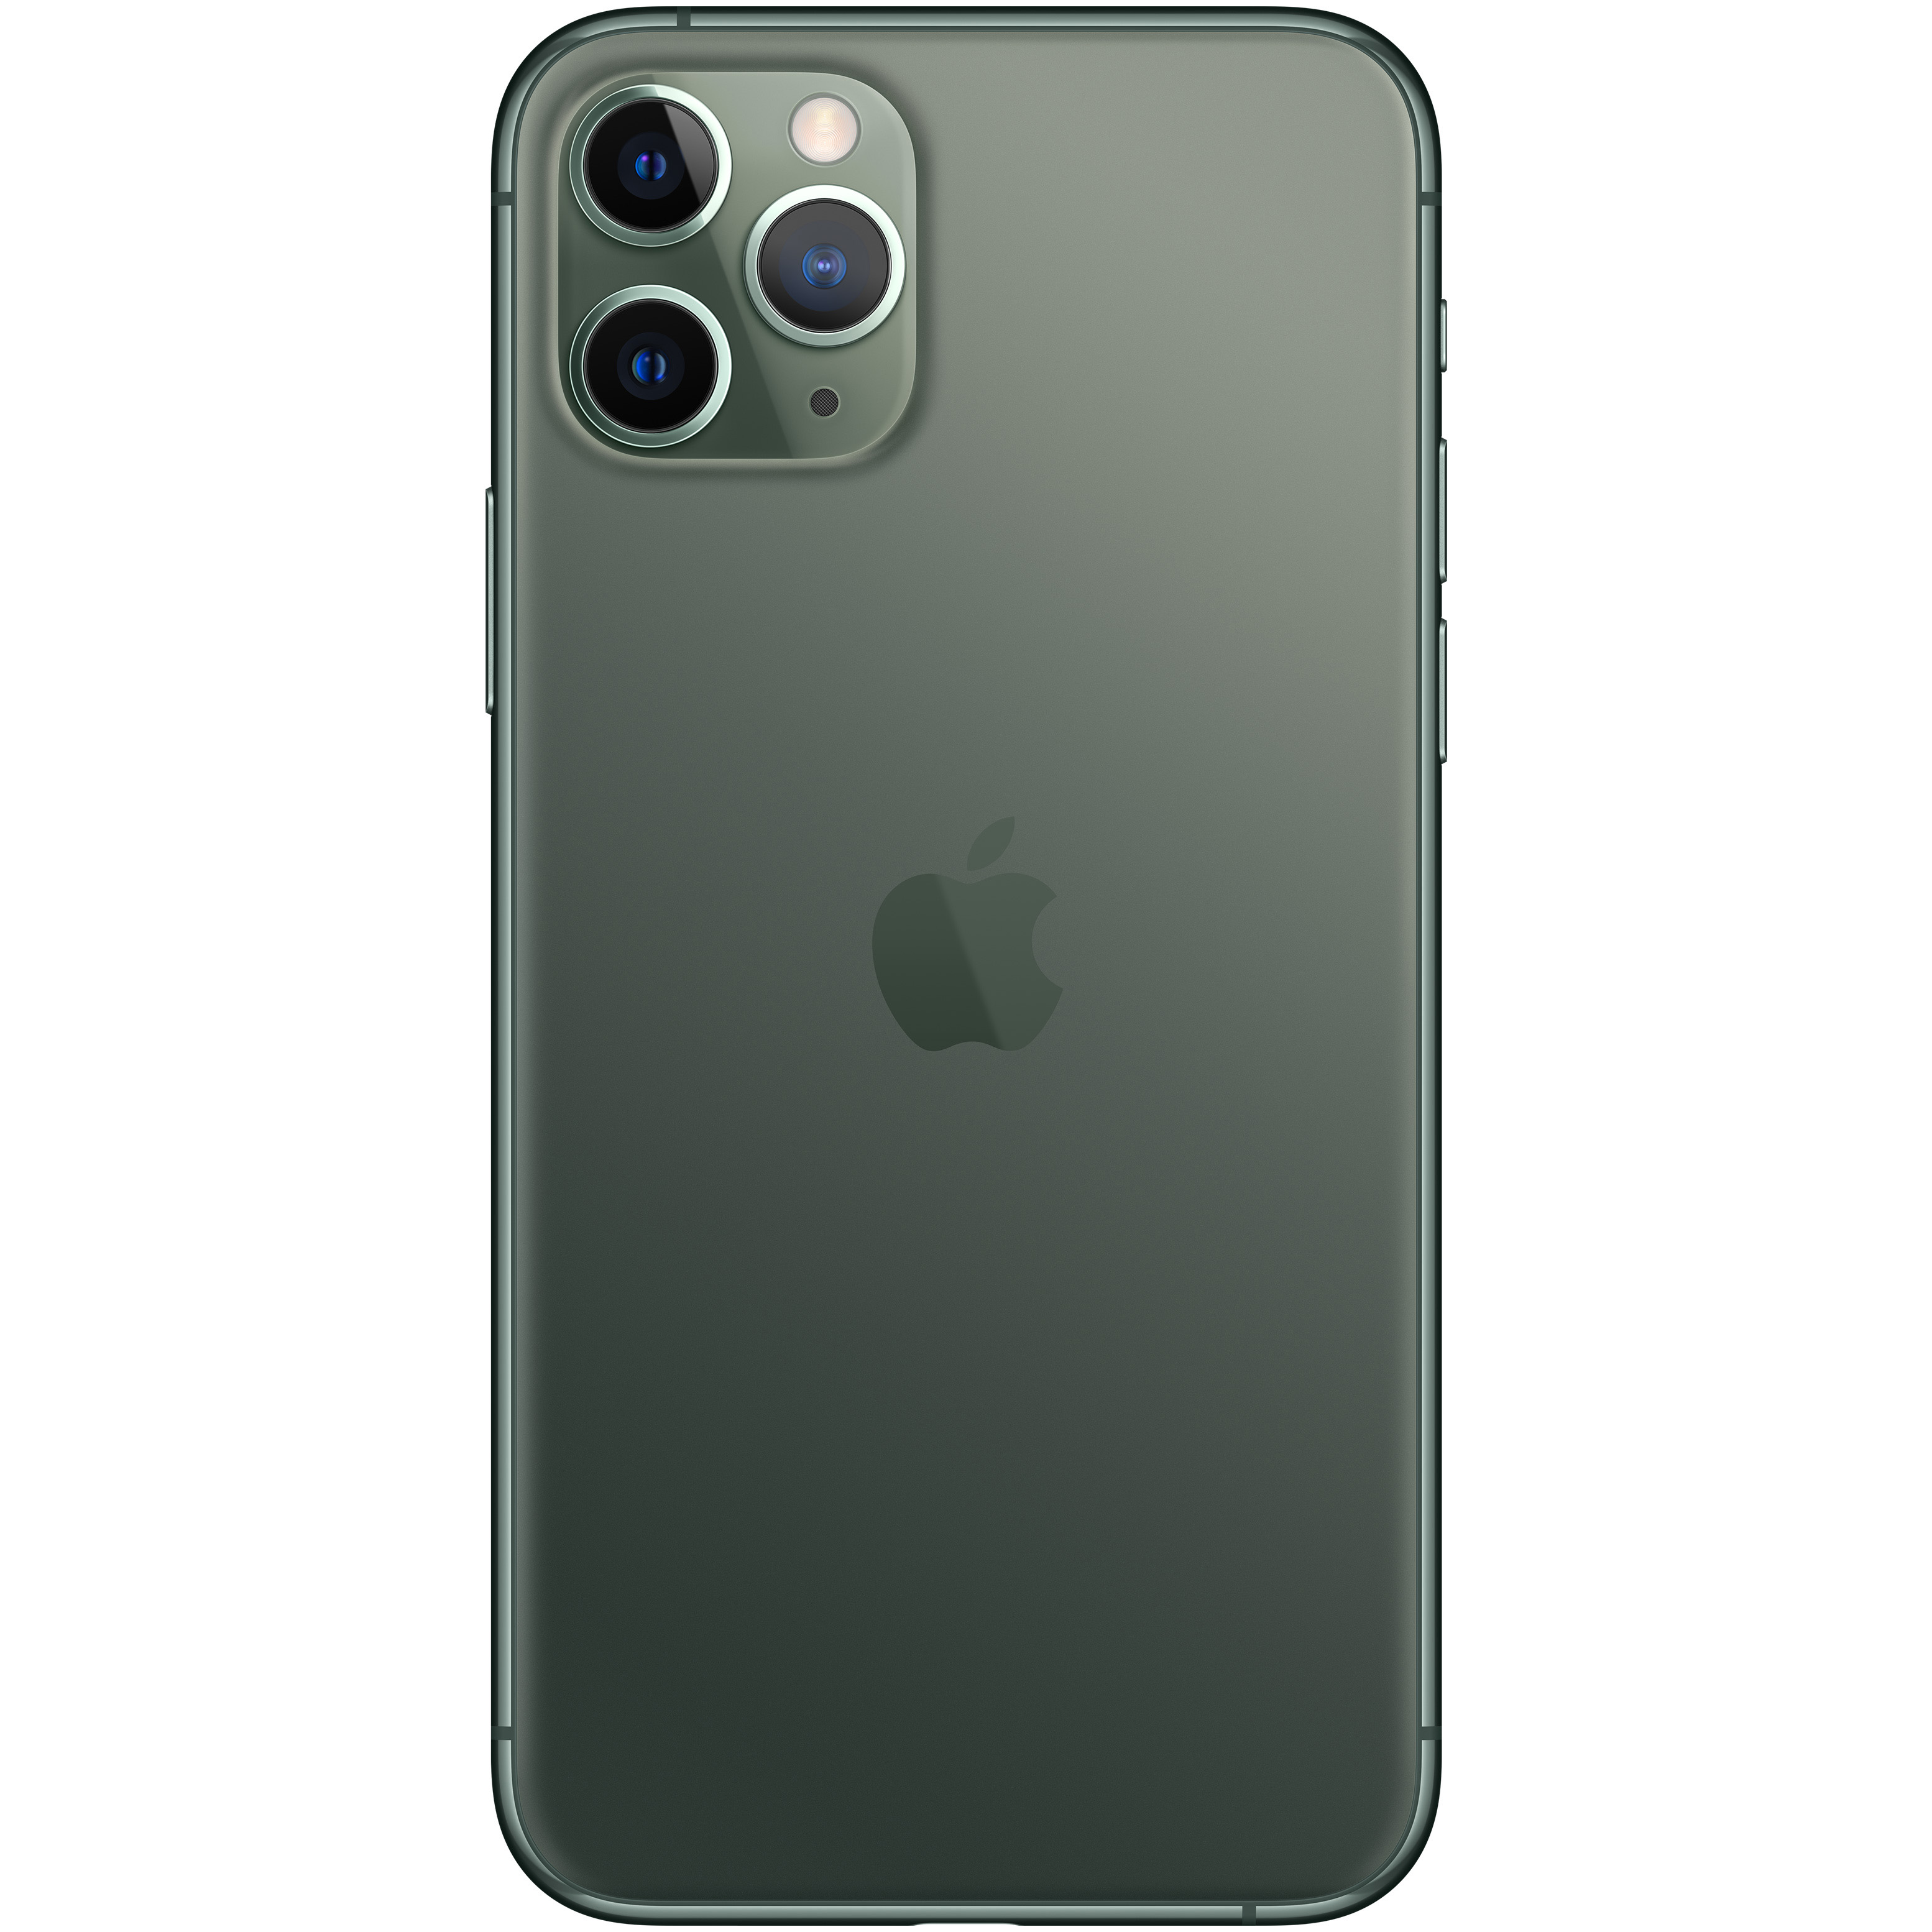 Айфон 11 256 оригинал. Iphone 11 Pro Max 256gb. Iphone 11 Pro 64gb. Apple iphone 11 Pro Max 64gb Midnight Green. Iphone 11 Pro Max Space Gray.